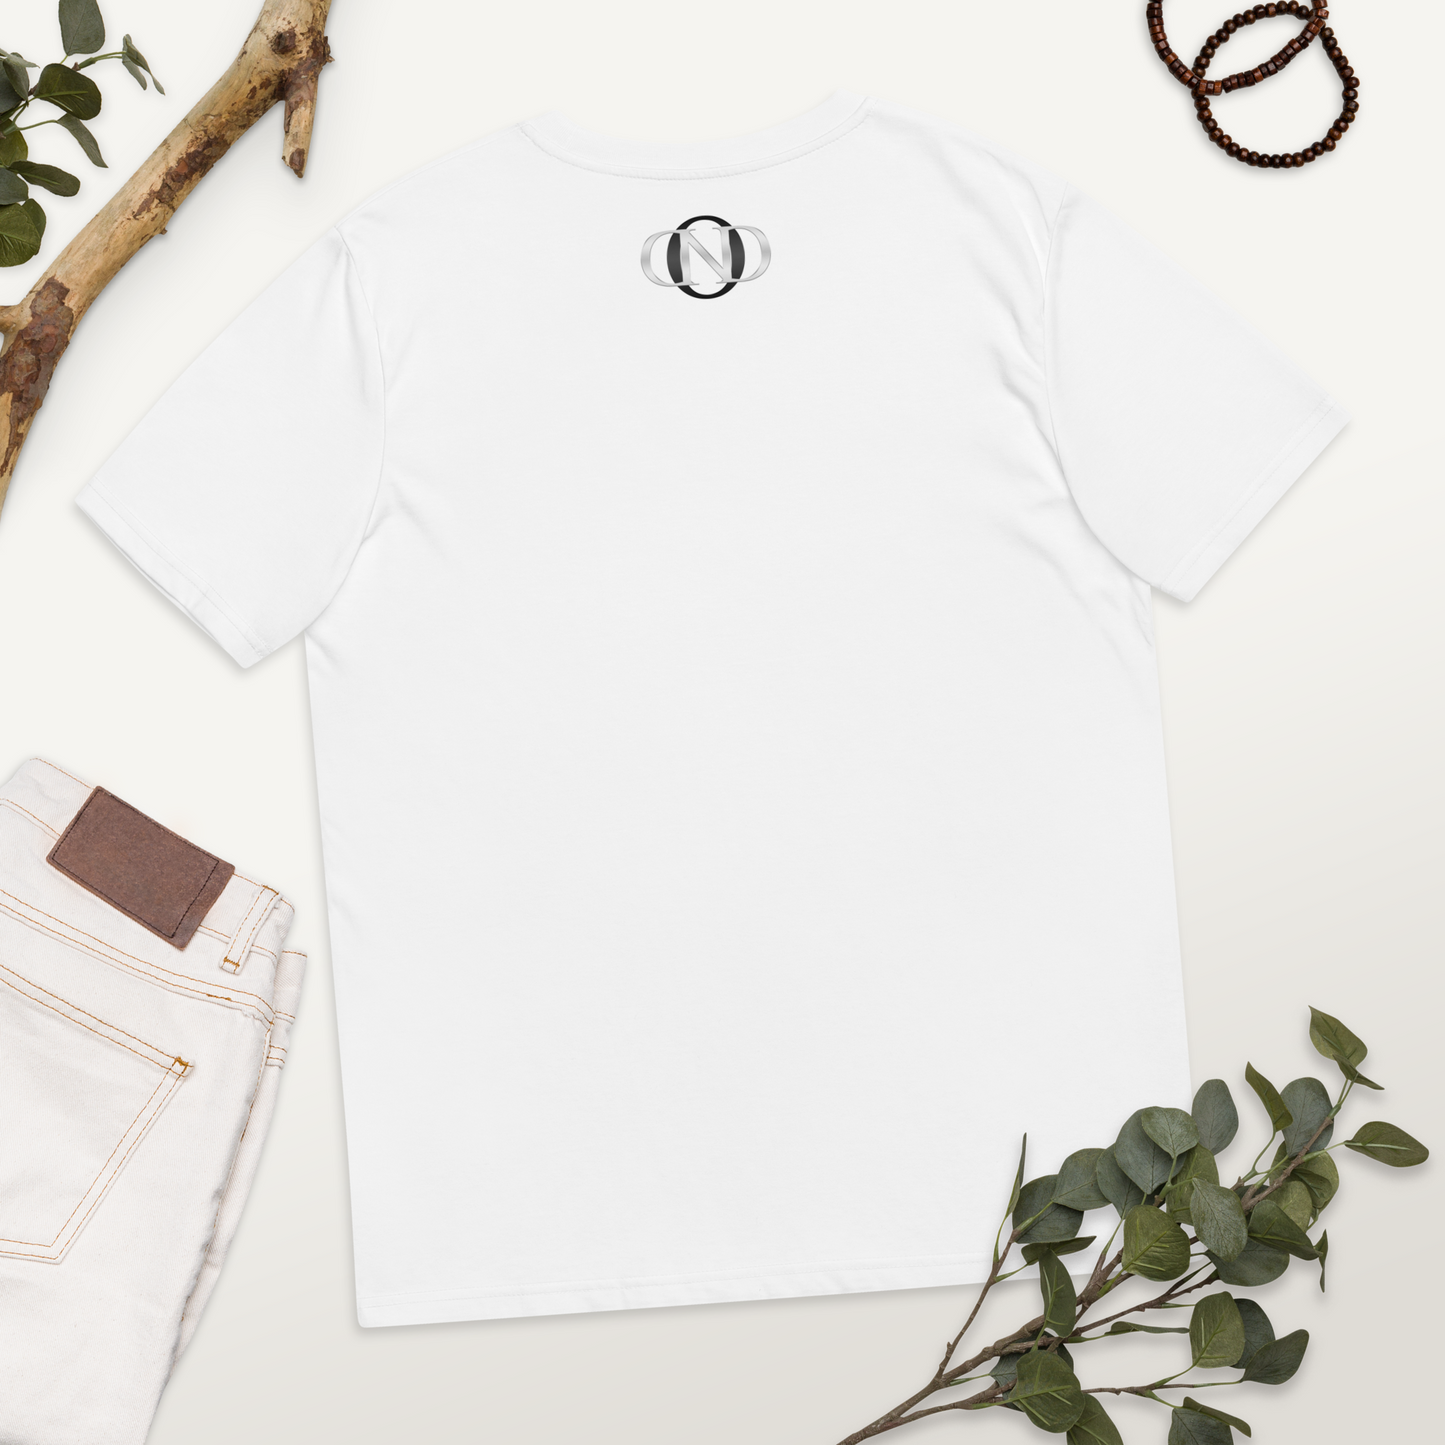 Neduz Designs Exposed Noel Tatilleri Ren Geyiği Unisex organik pamuklu t-shirt